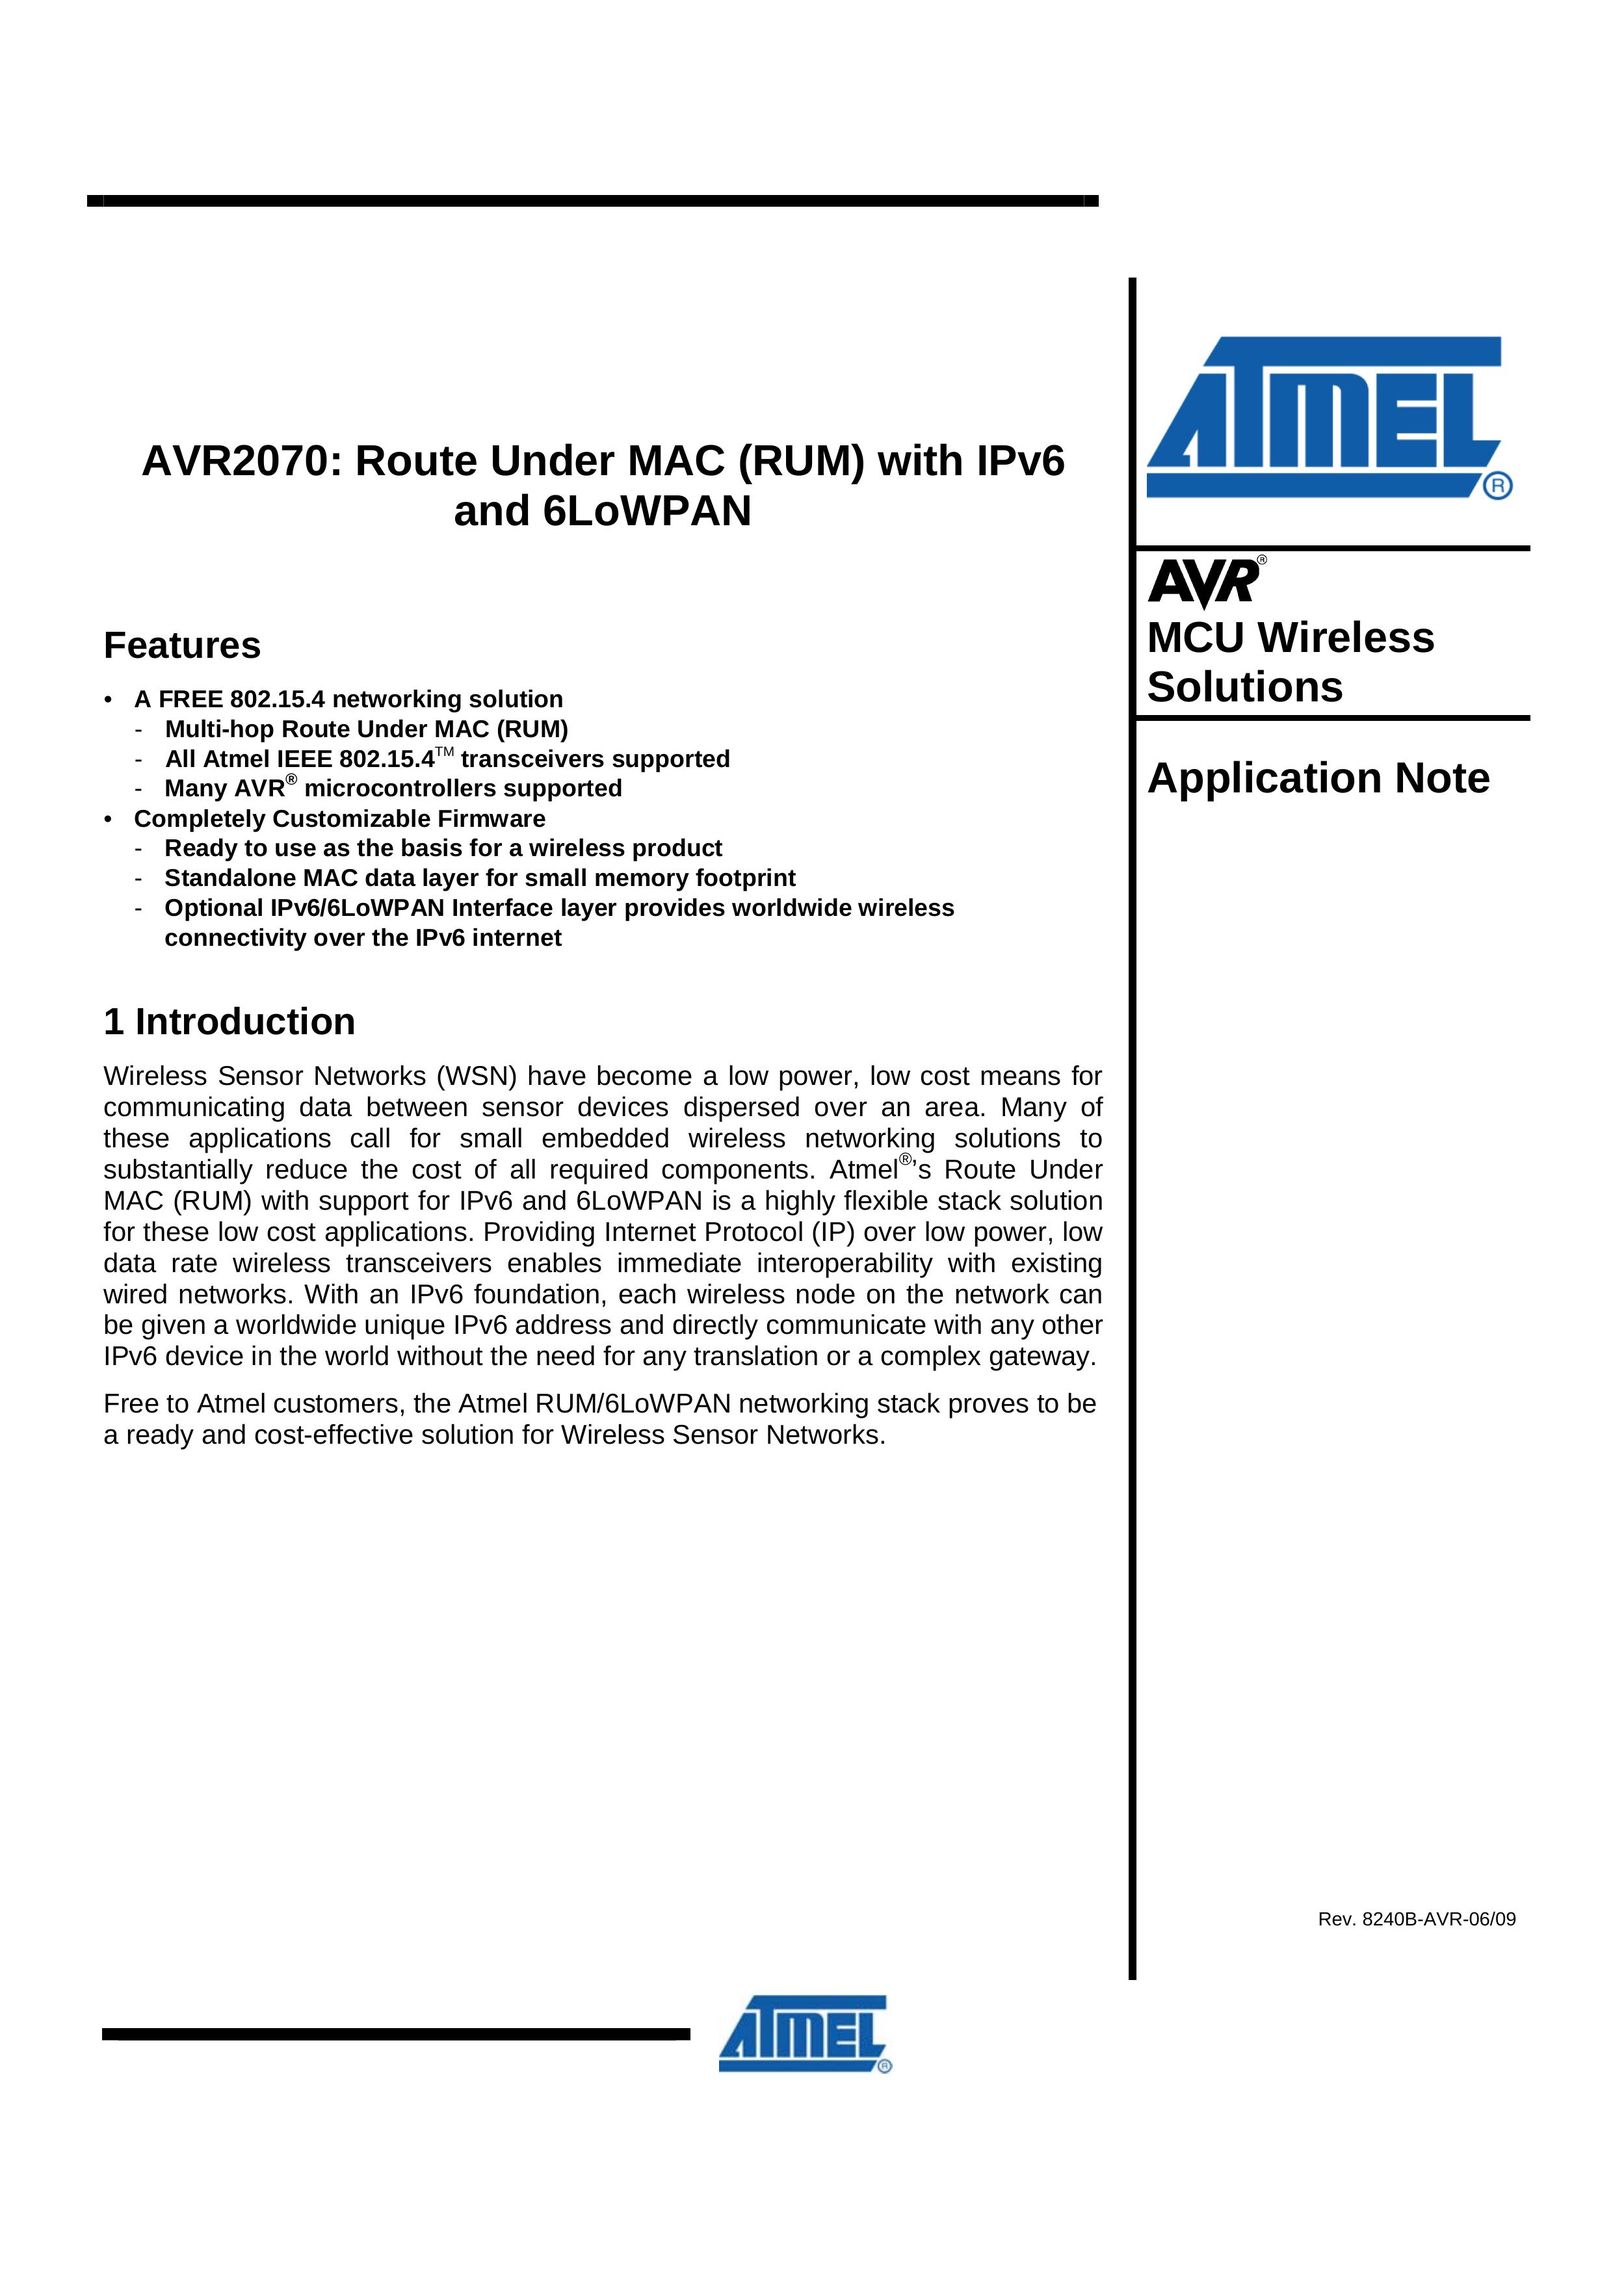 Atmel AVR2070 Network Router User Manual